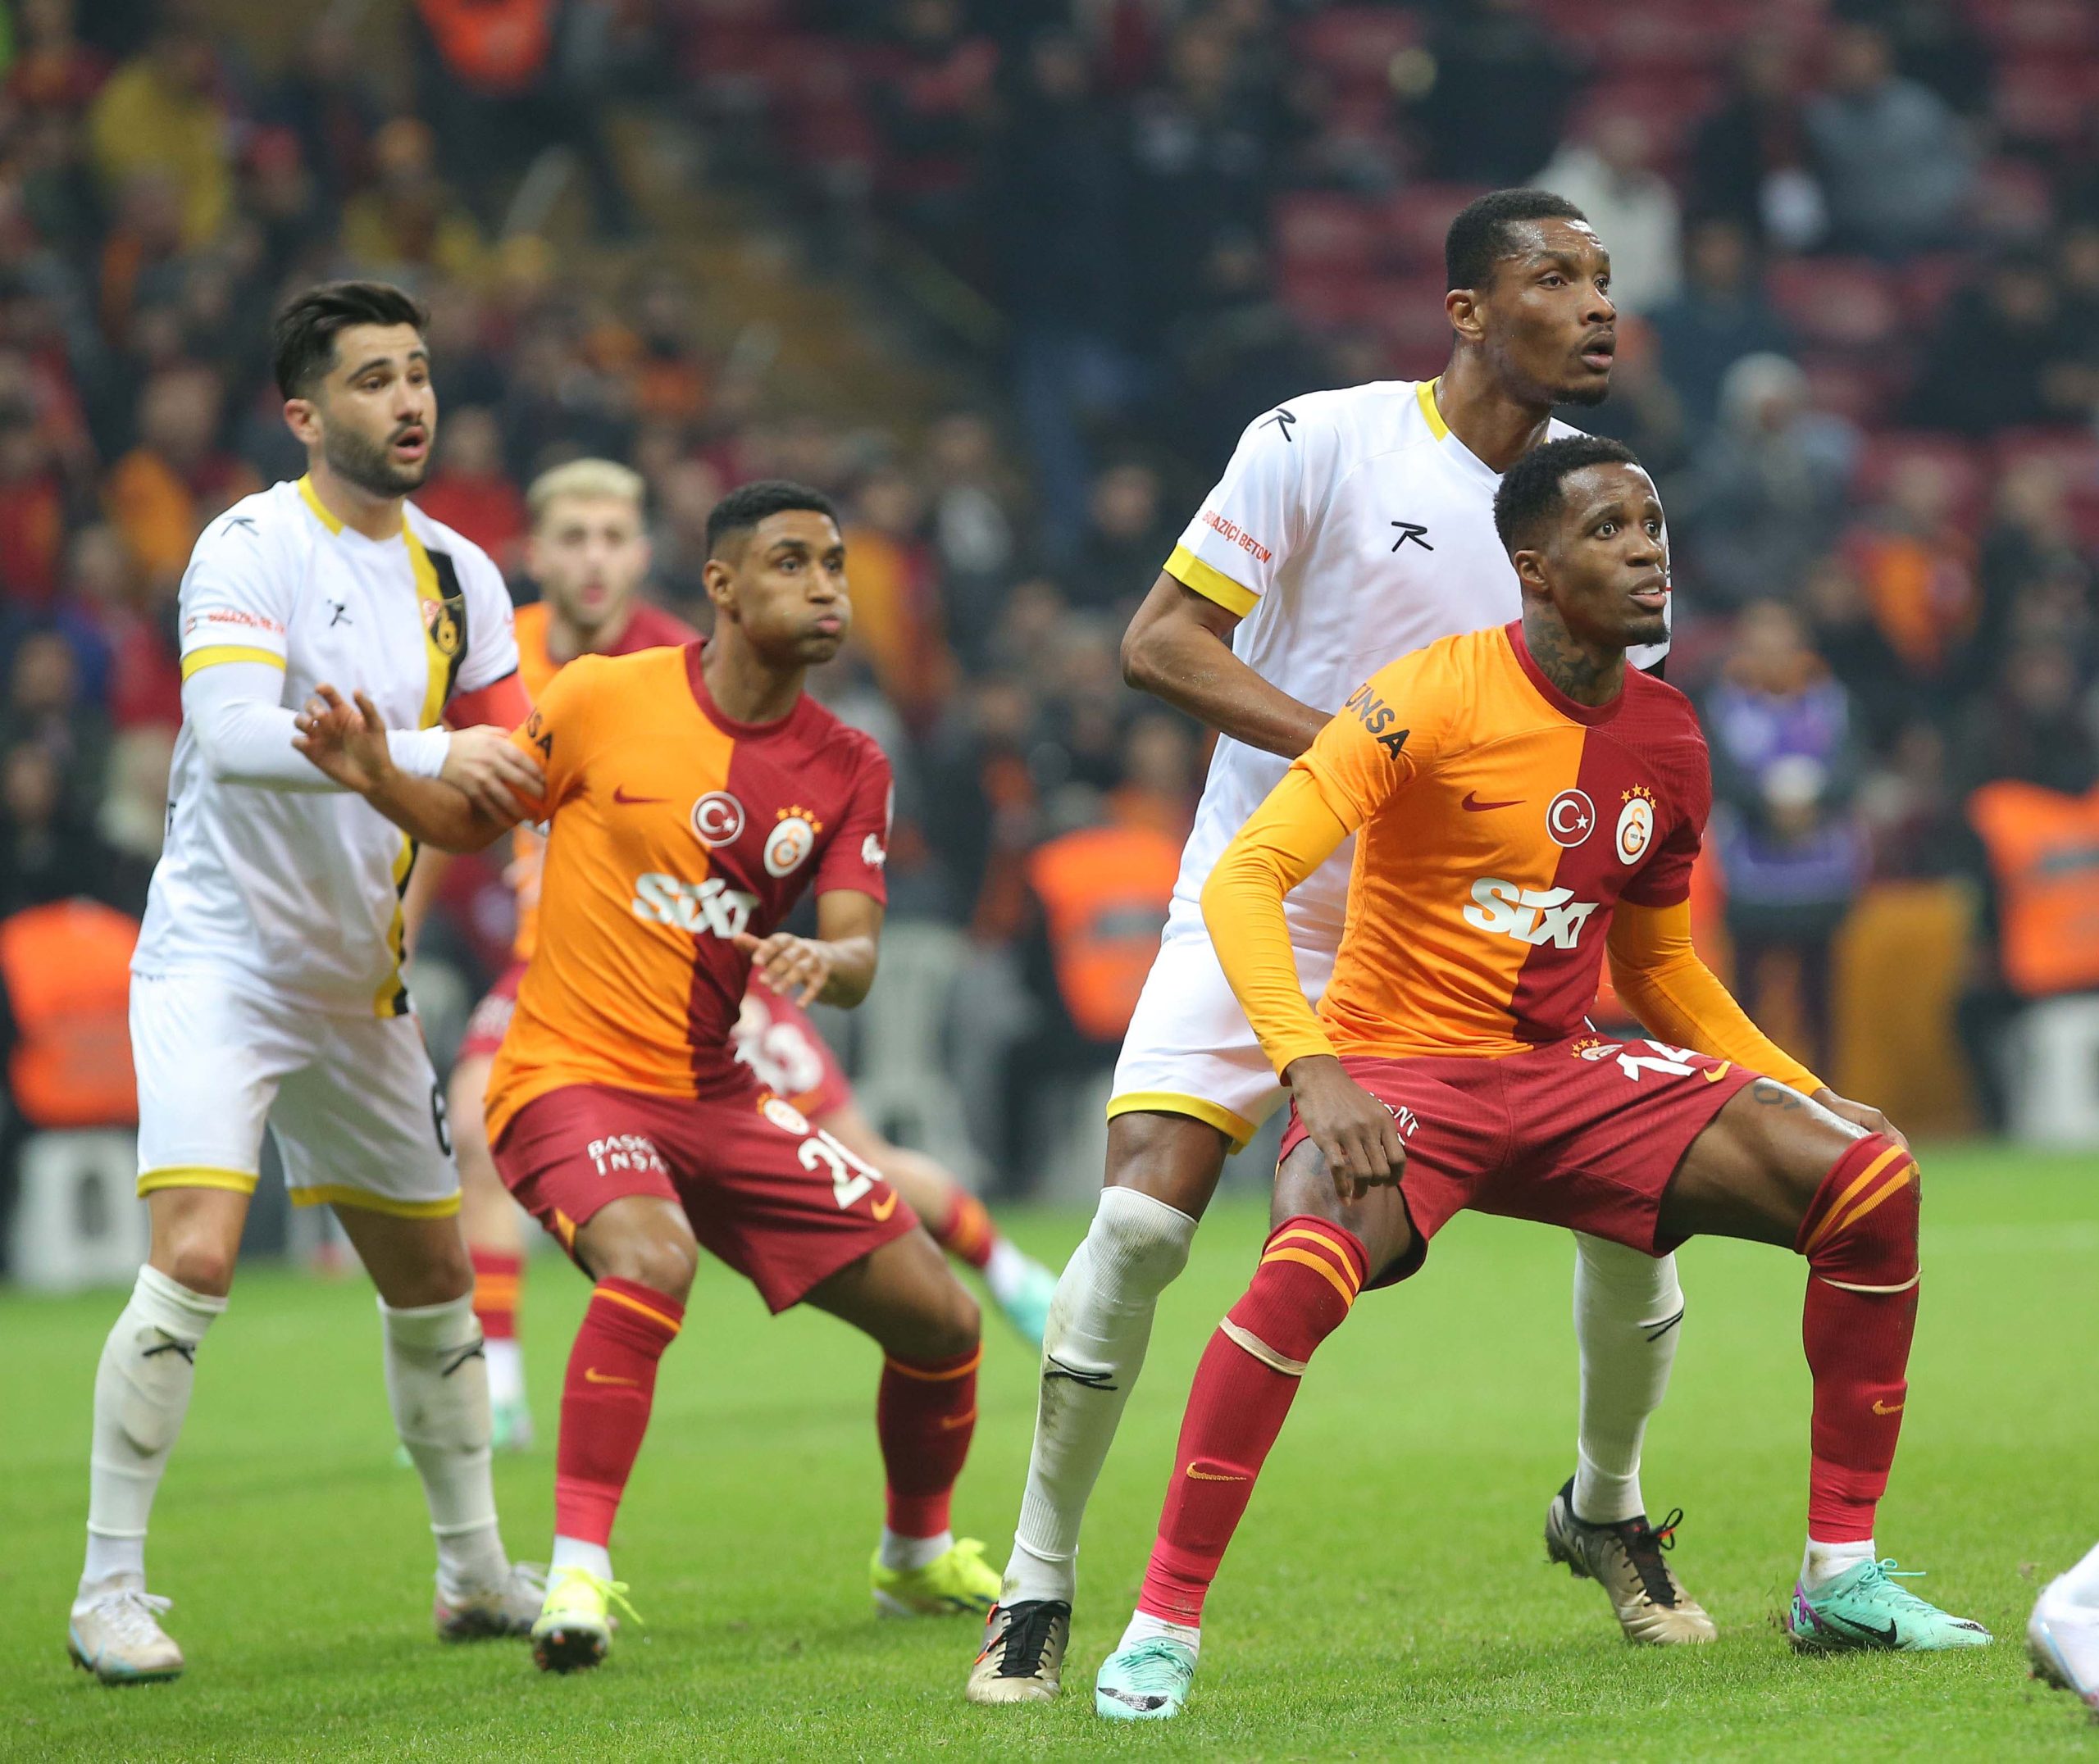 "Galatasaray'a akan oyunda pozisyon vermedik ama 3 gol yedik!"